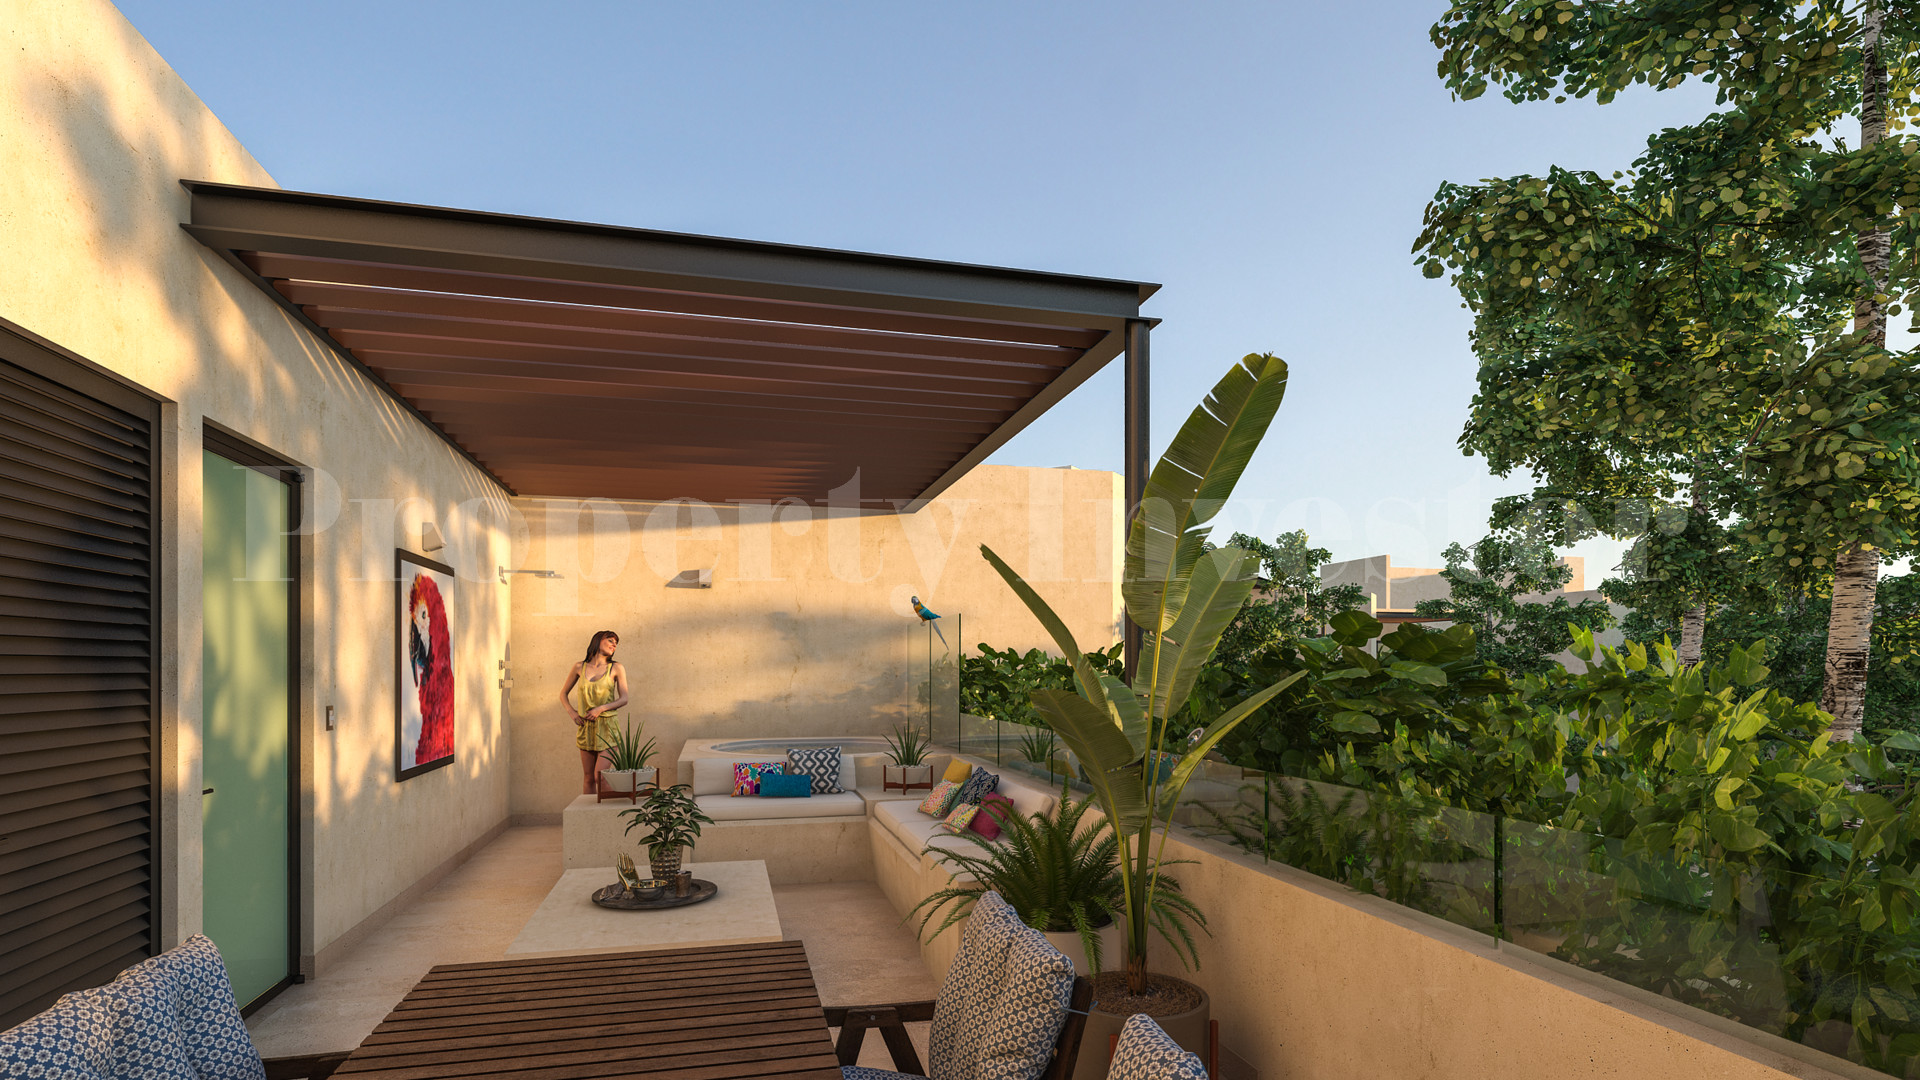 2 Bedroom Boutique Apartment with Garden in Tulum (C-001)